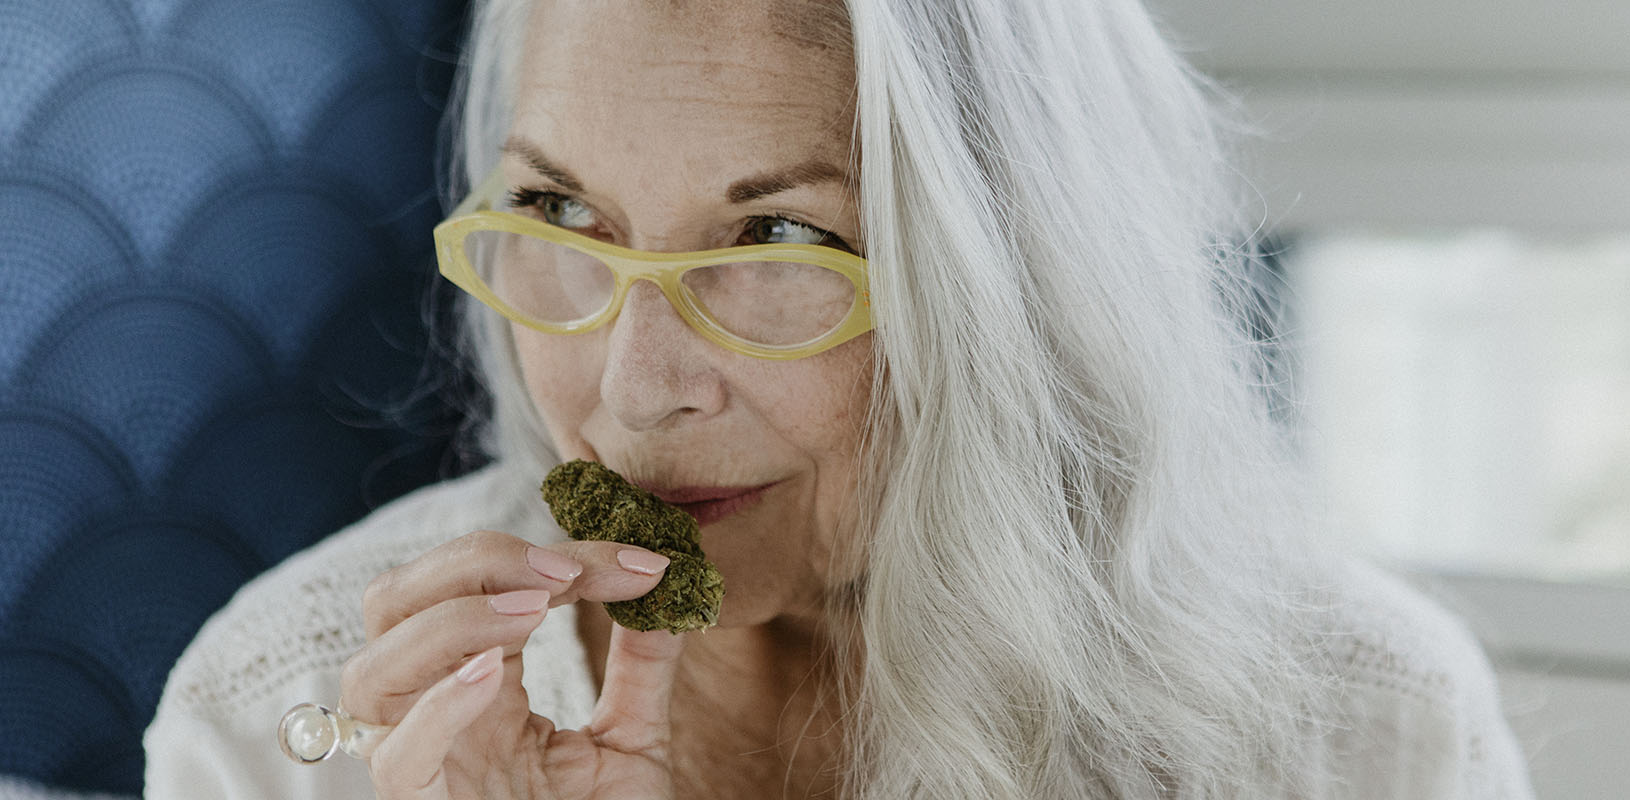 Mature woman eating cannabis edibles. What are terpenes? Buy weed in Ajax, Pickering.